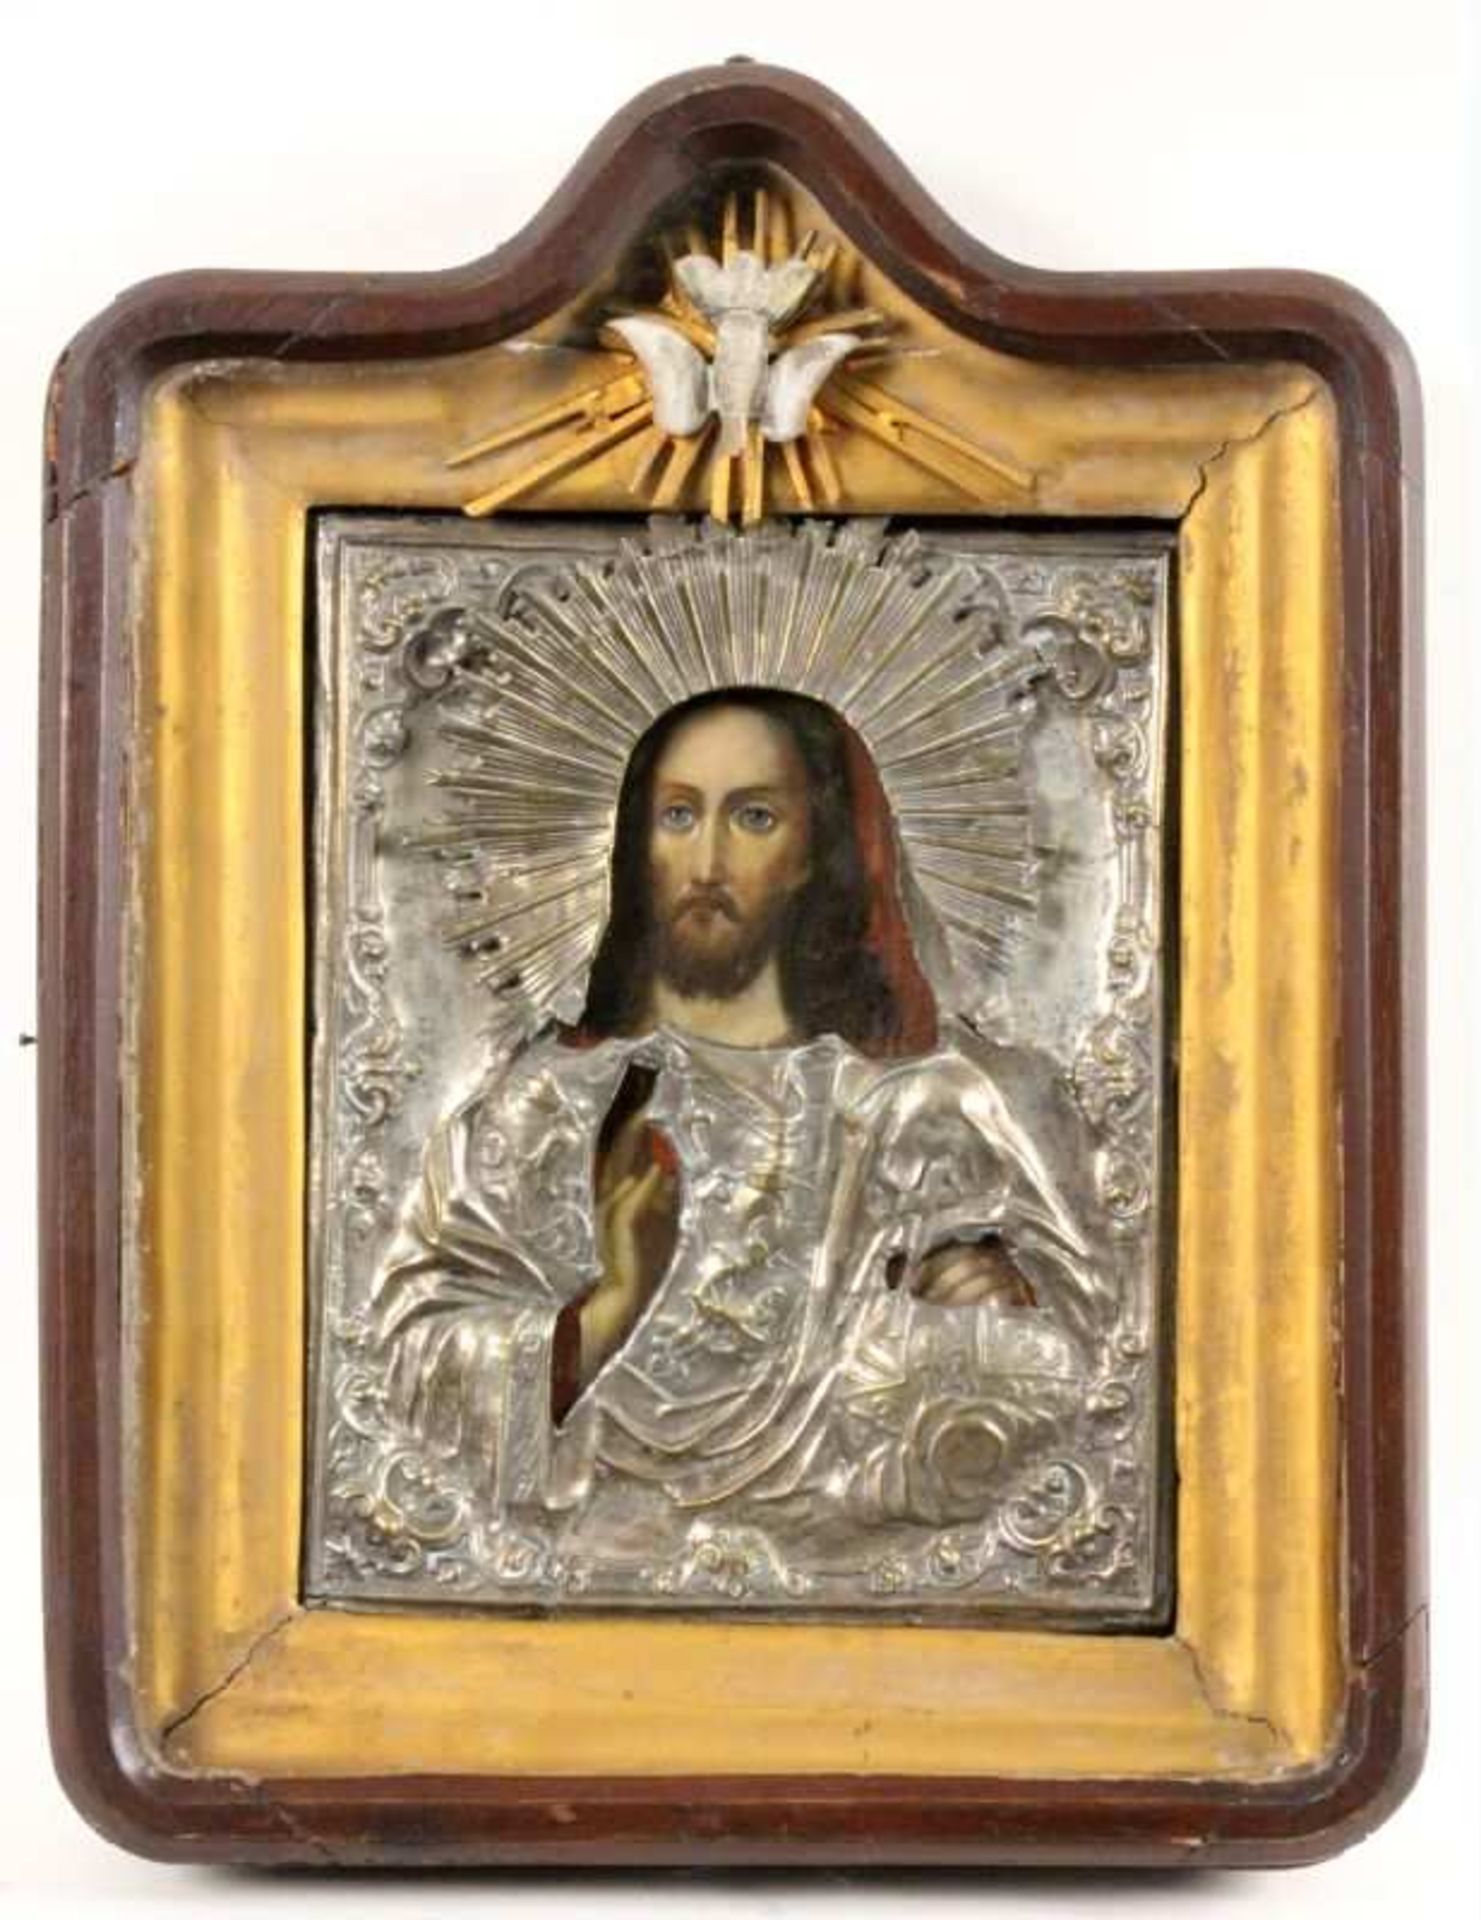 CHRISTUS PANTOKRATOR Russische Ikone, 19.Jh. Mit versilbertem Oklad, im verglasten Kasten. 34x27cm